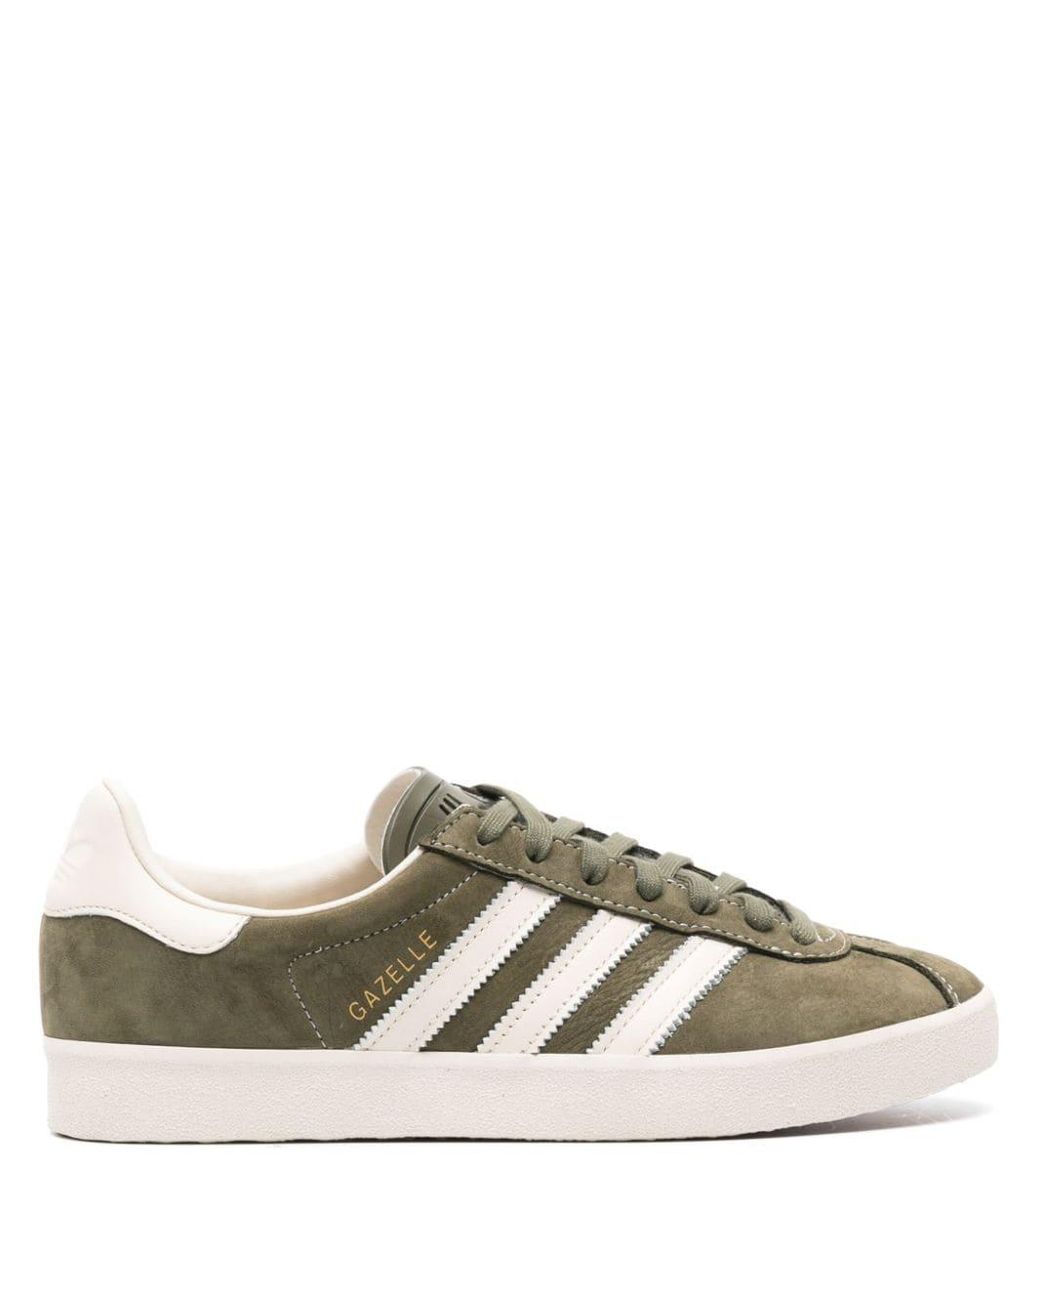 adidas Gazelle 85 3-stripes Suede Sneakers in Green | Lyst